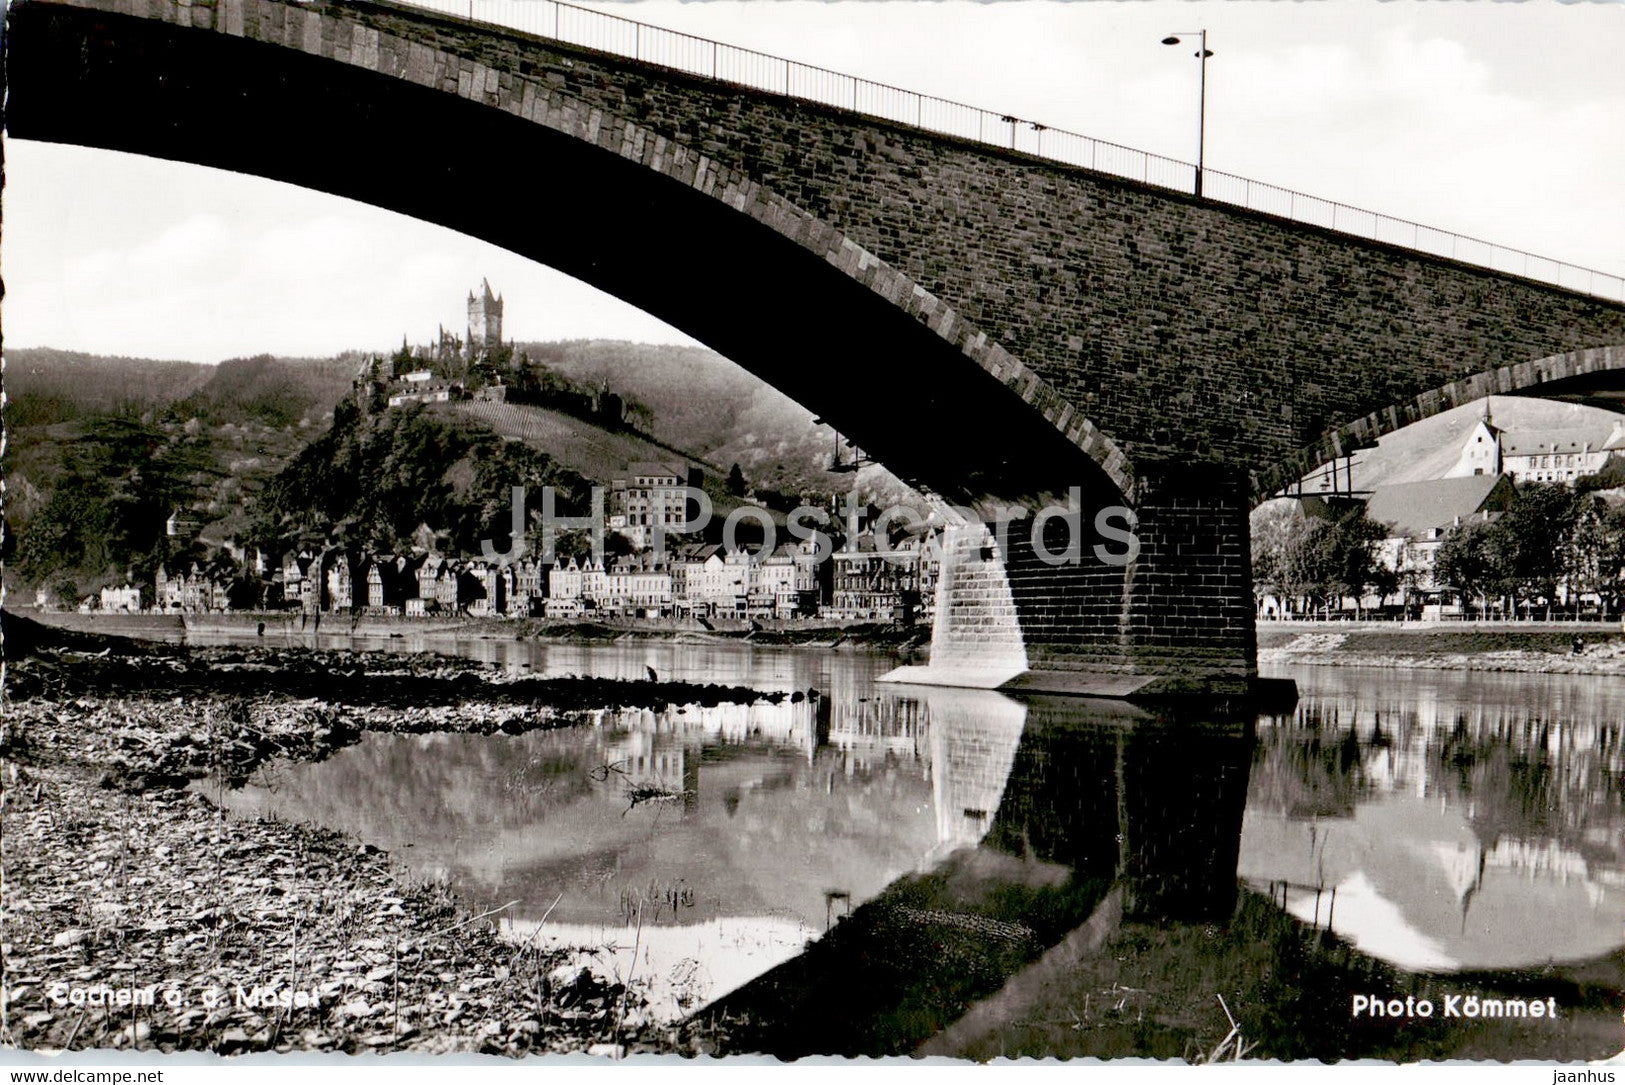 Cochem a d Mosel - bridge - old postcard - 1957 - Germany - used - JH Postcards